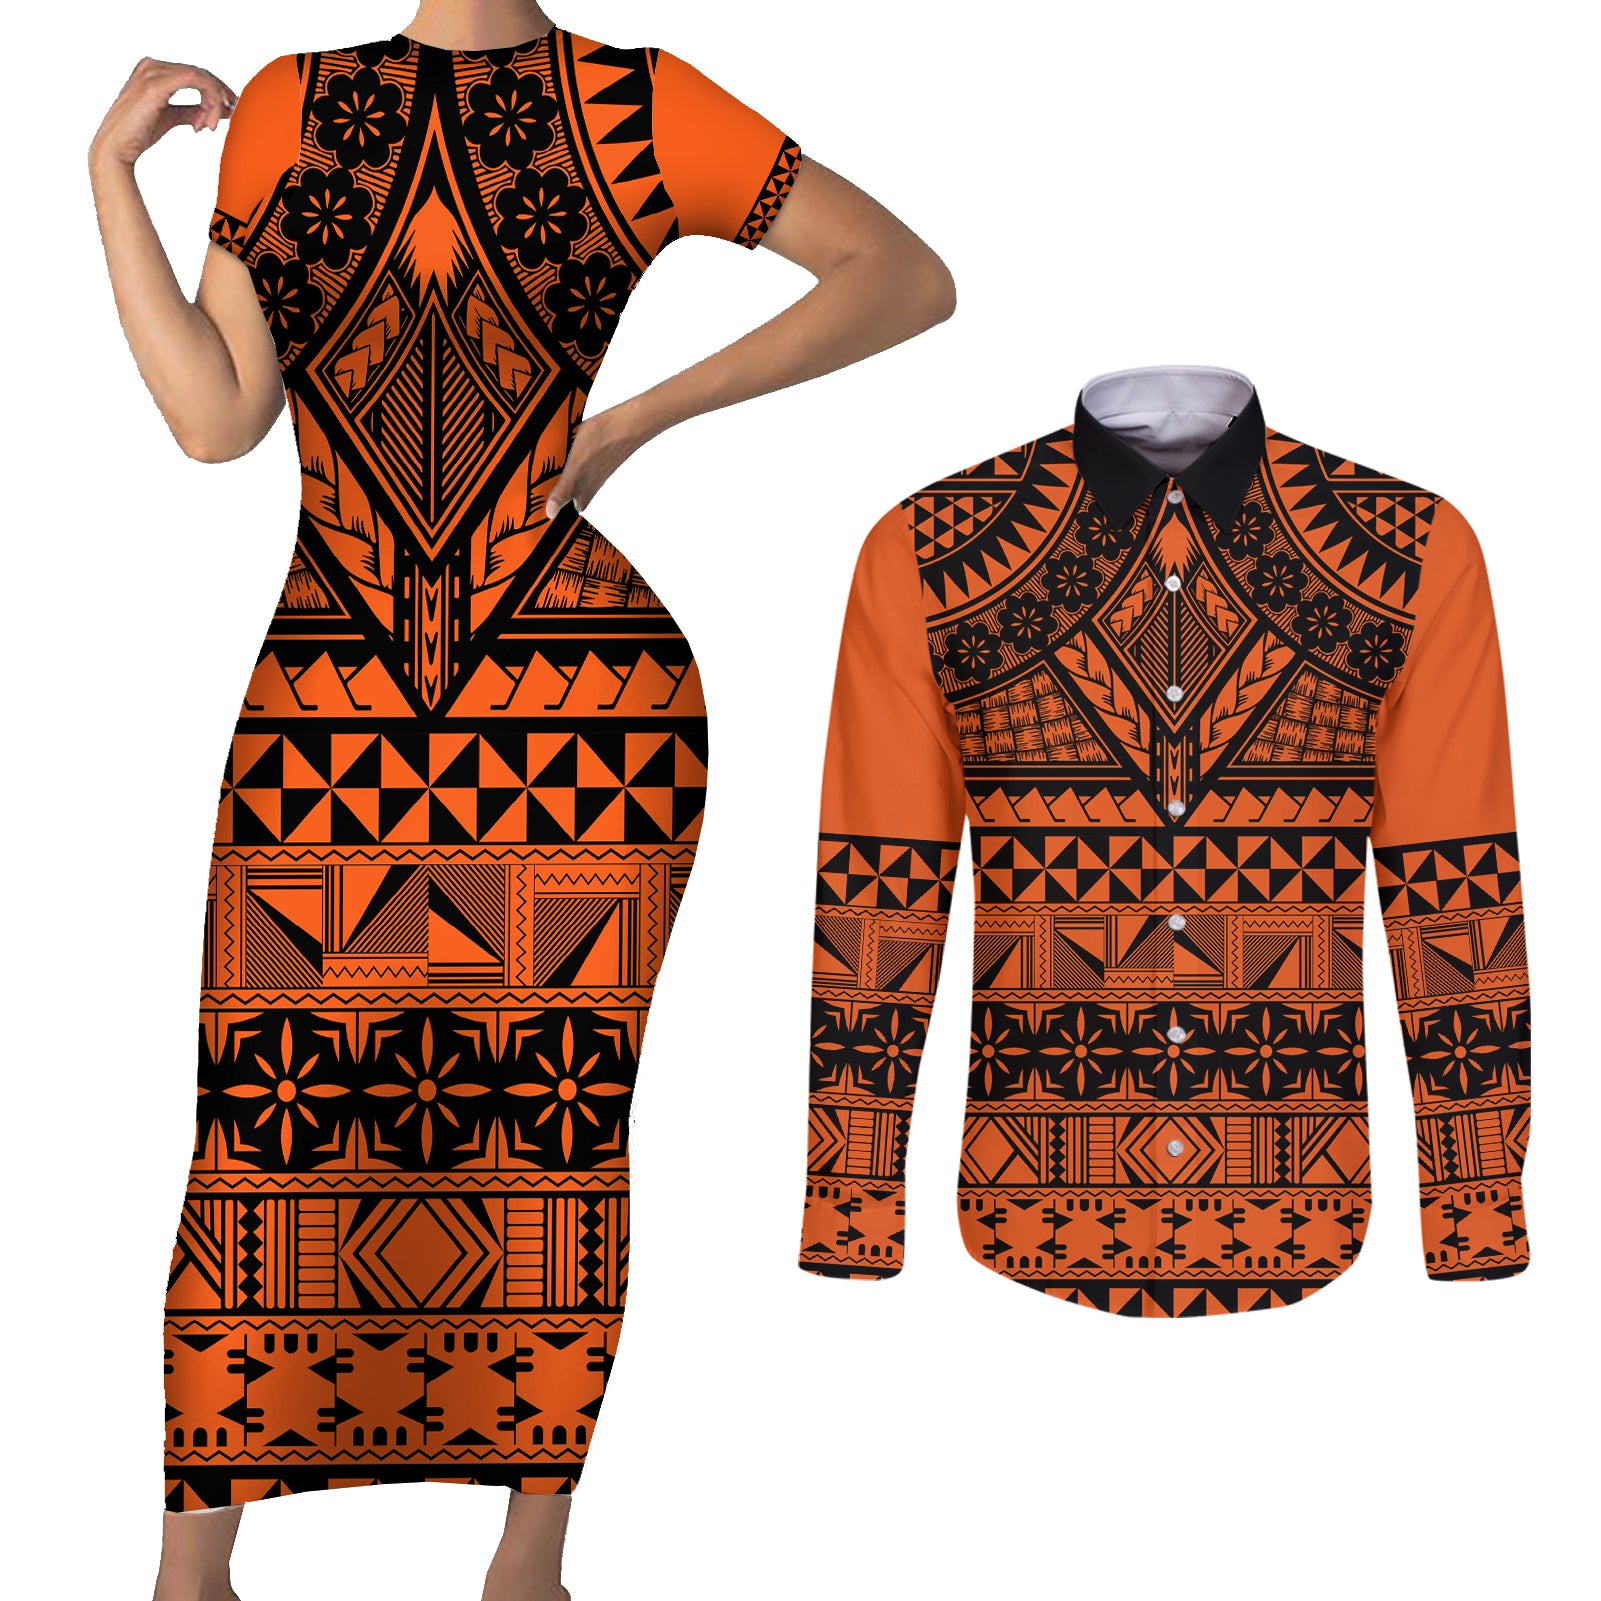 Halo Olaketa Solomon Islands Couples Matching Short Sleeve Bodycon Dress and Long Sleeve Button Shirt Melanesian Tribal Pattern Orange Version LT14 Orange - Polynesian Pride